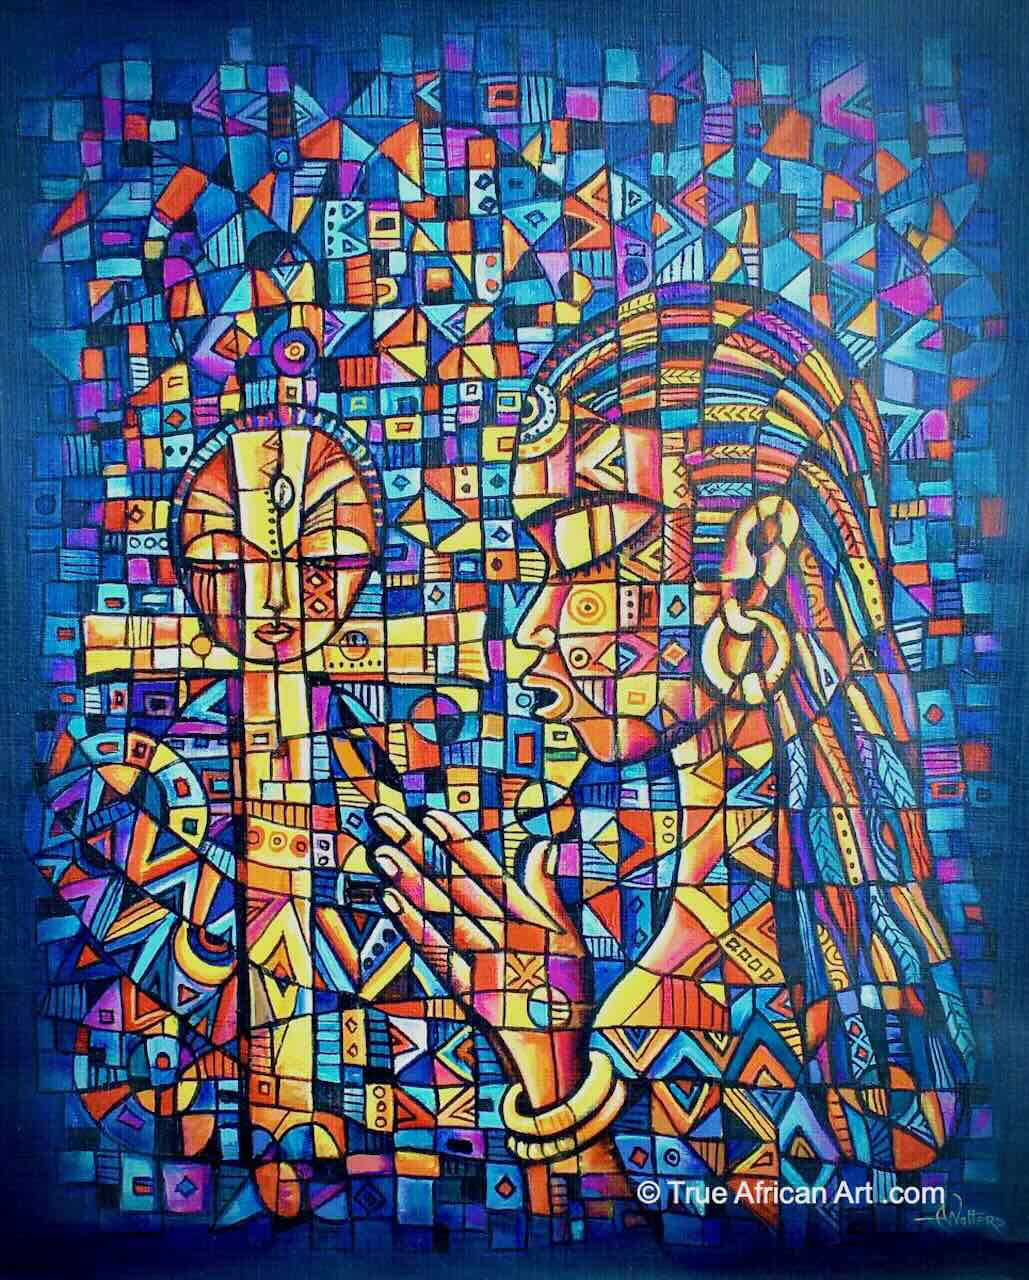 Angu Walters  |  Cameroon  |  "Prayer 2024"  |  Original  |  True African Art .com